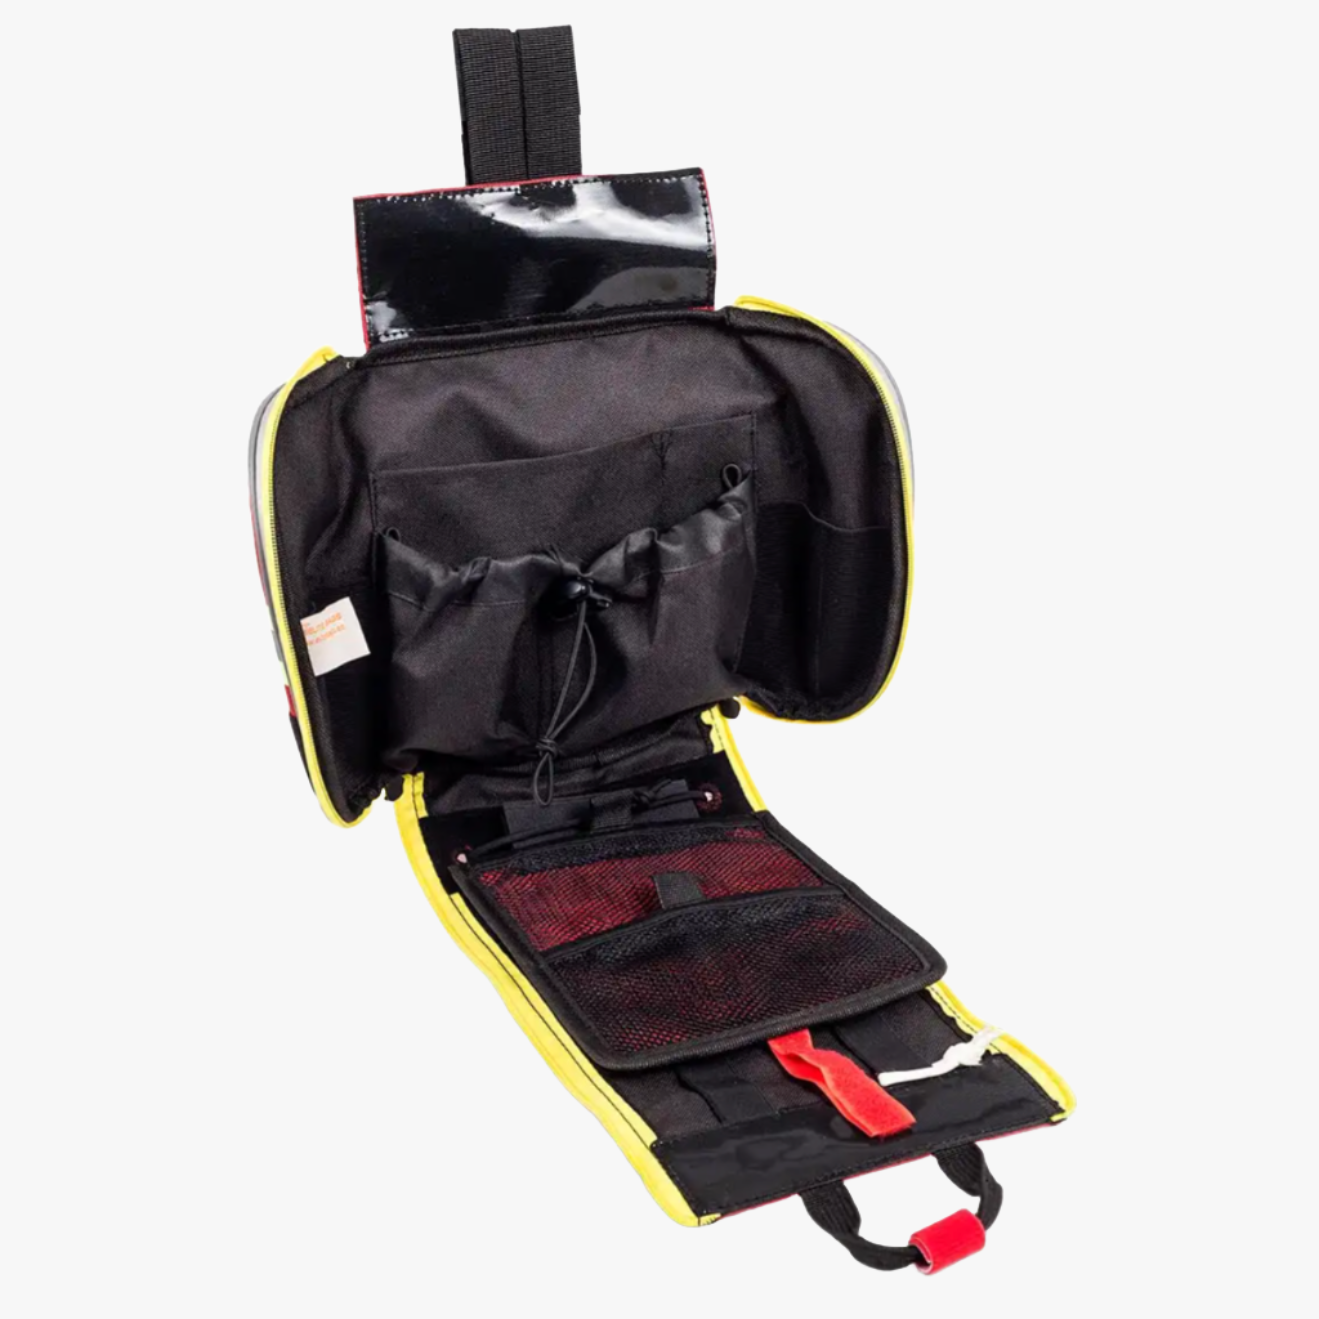 Elite Bags QUICKAID first aid bag for legs